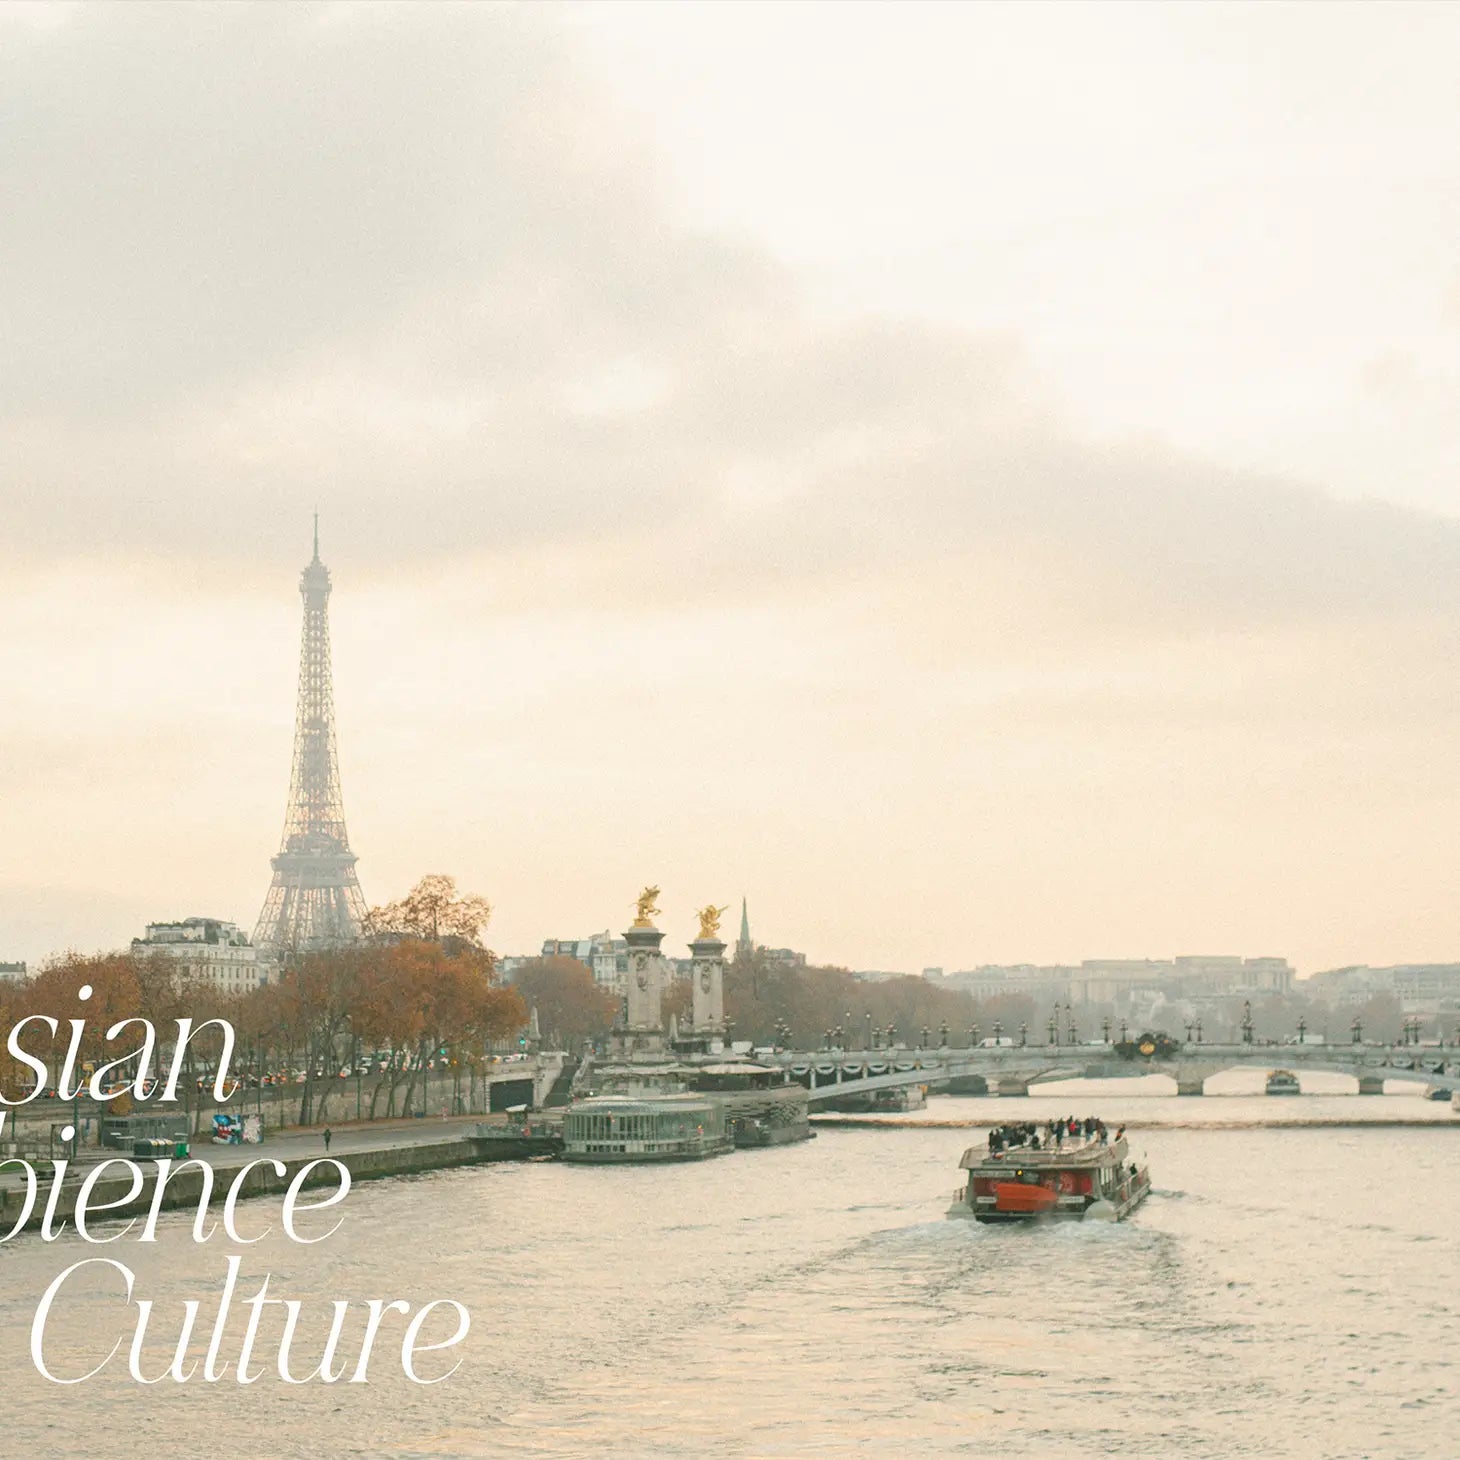 París: Dreamy Tips for the City of Love, libro